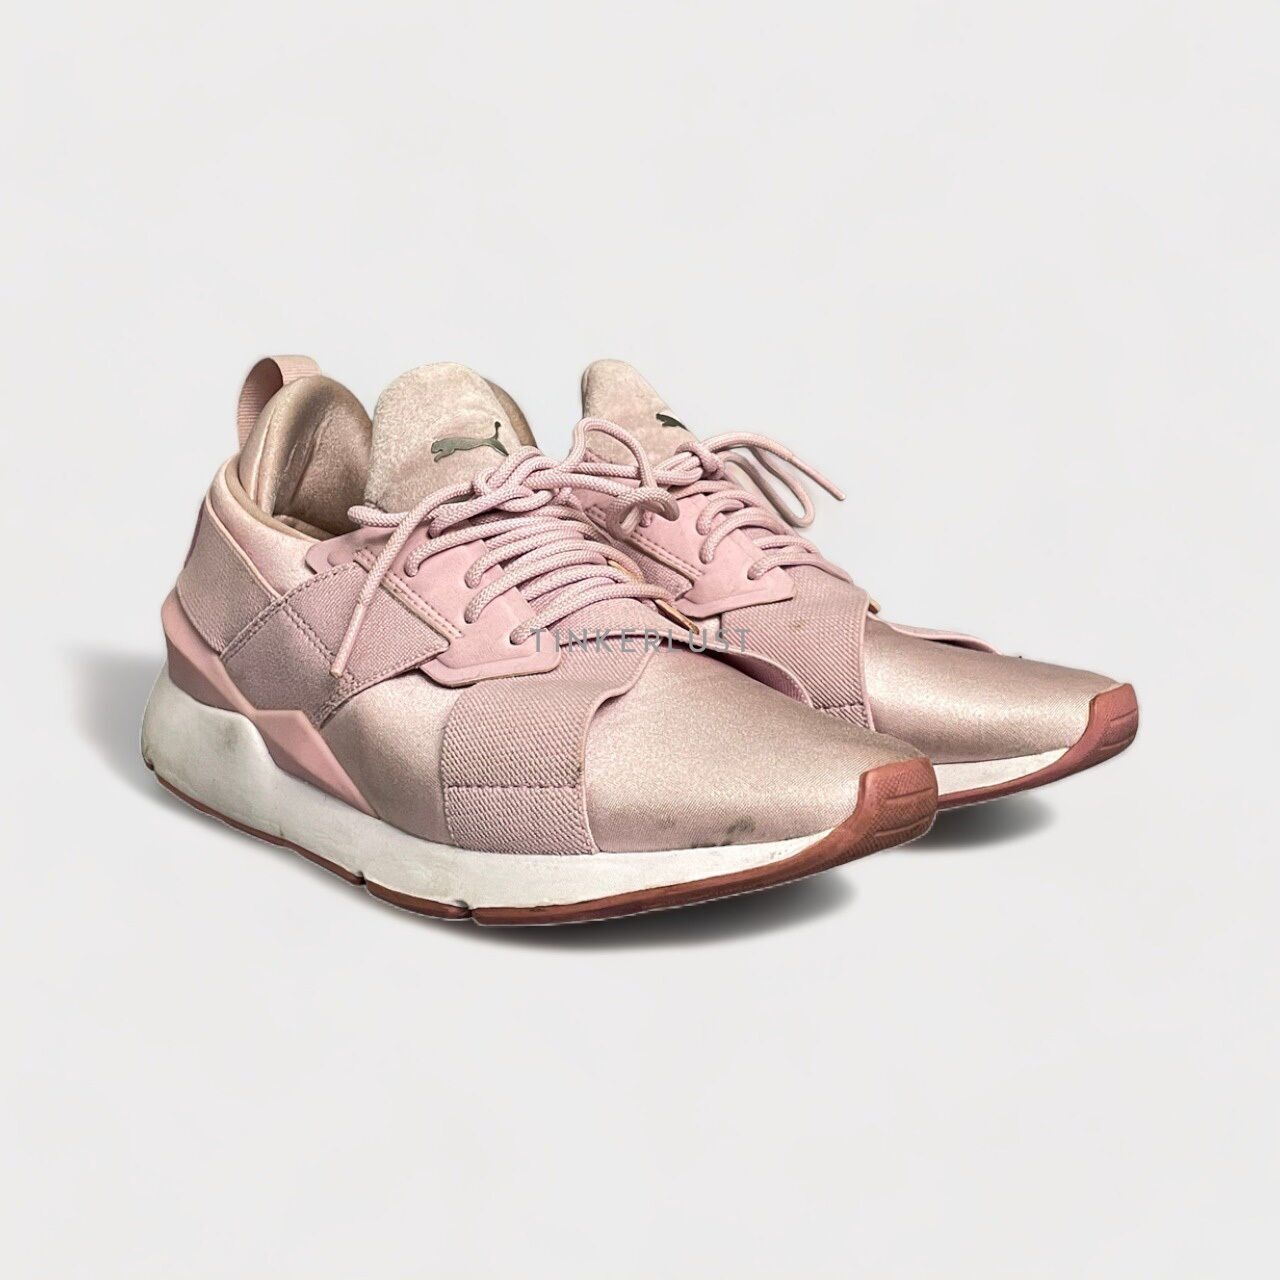 Puma Muse Satin Pink Shoes